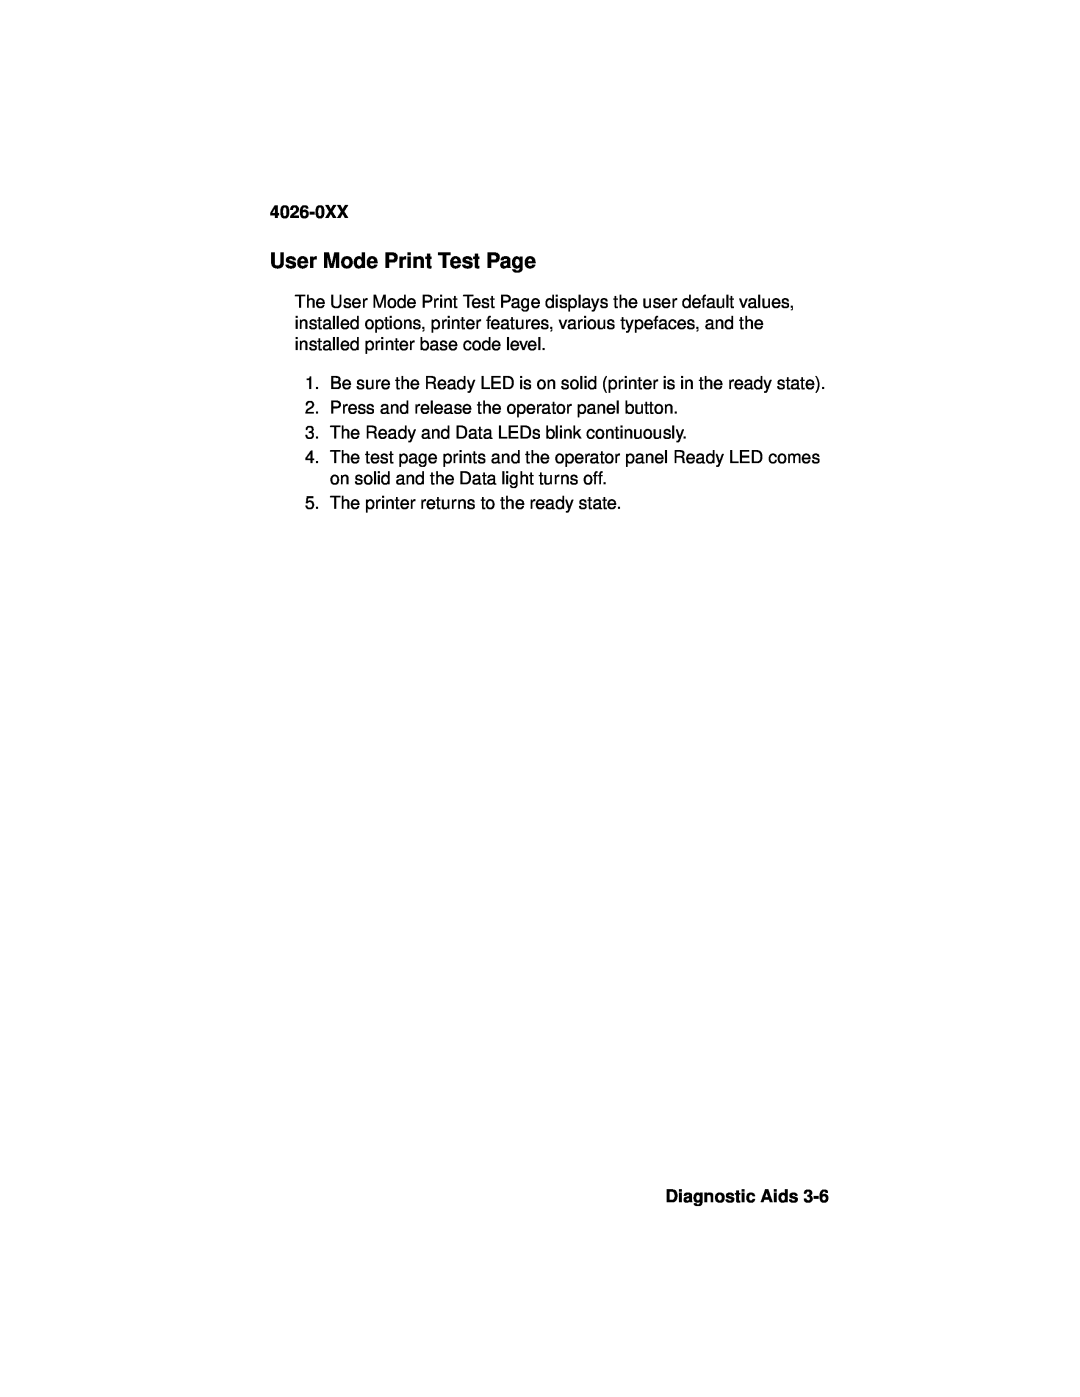 Lexmark 4026-0XX manual User Mode Print Test Page, Diagnostic Aids 